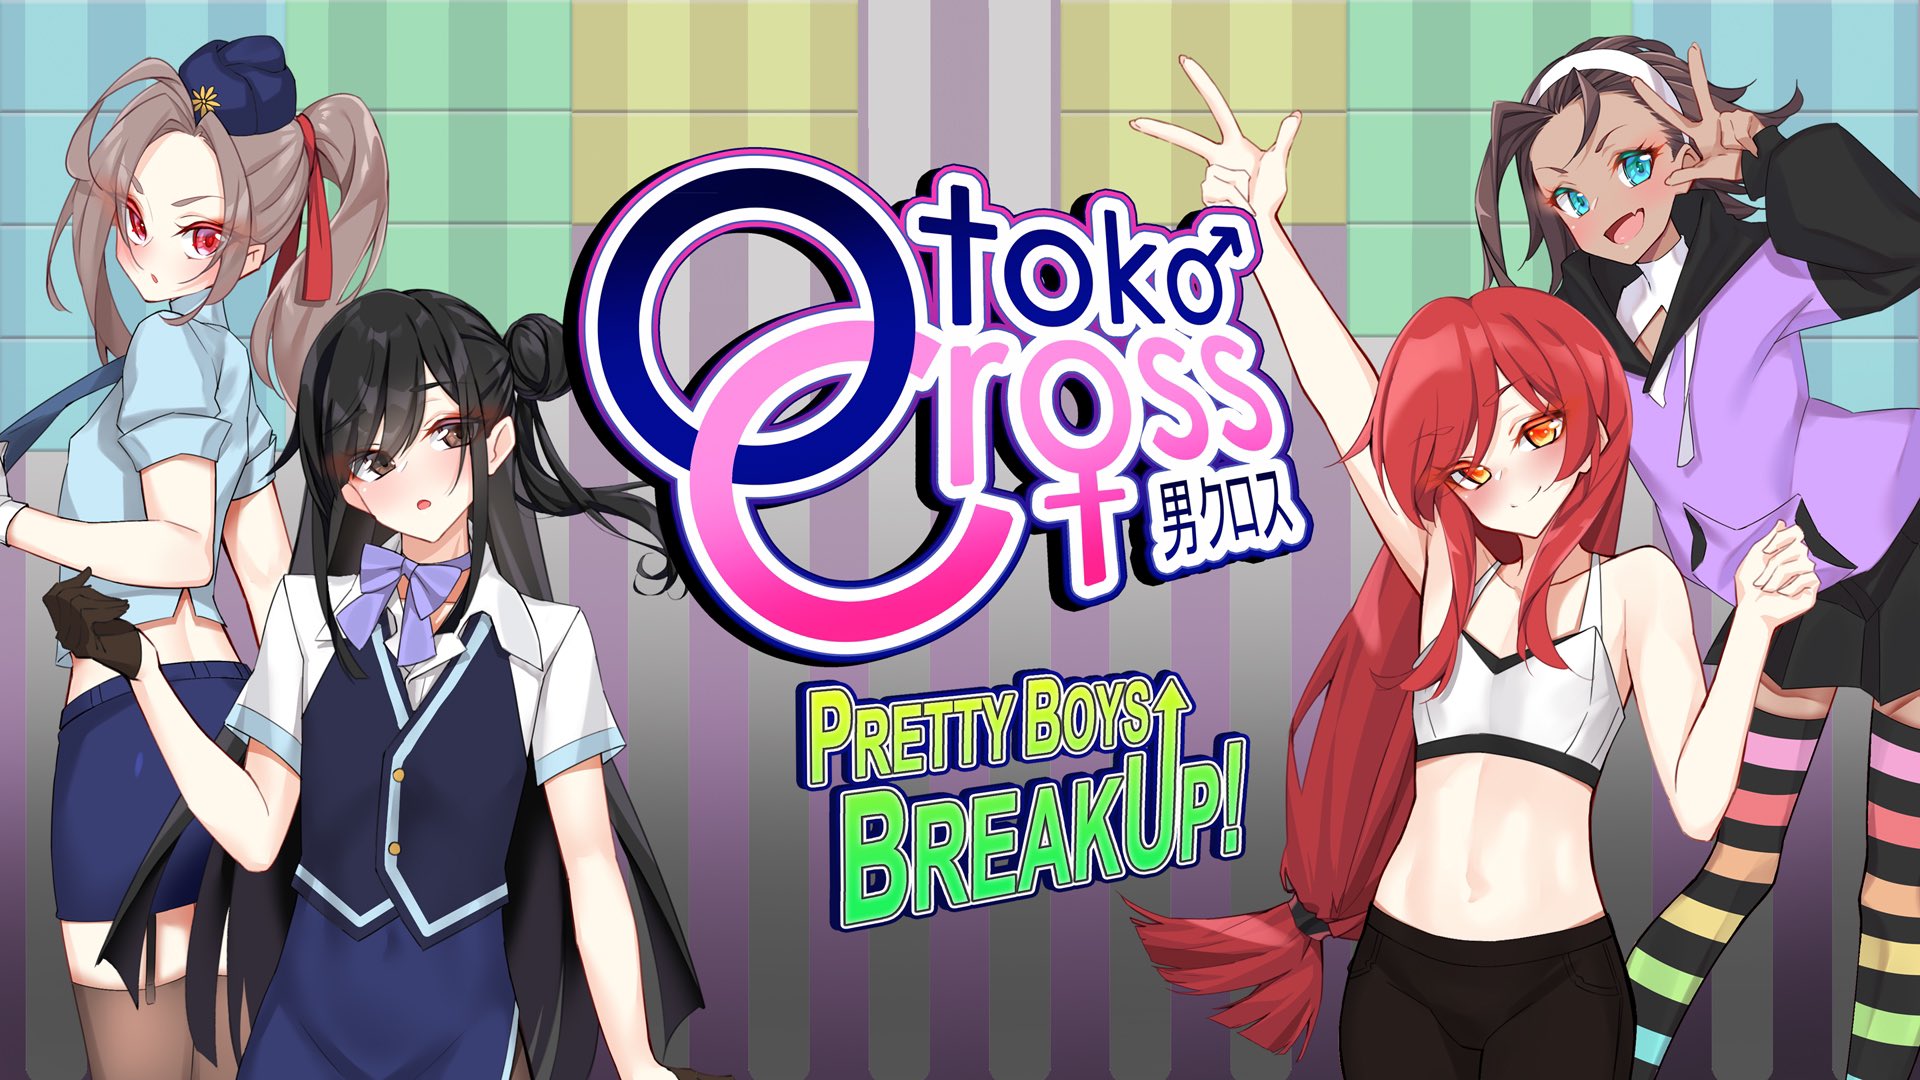 The key art for Otoko Cross: Pretty Boys Breakup!